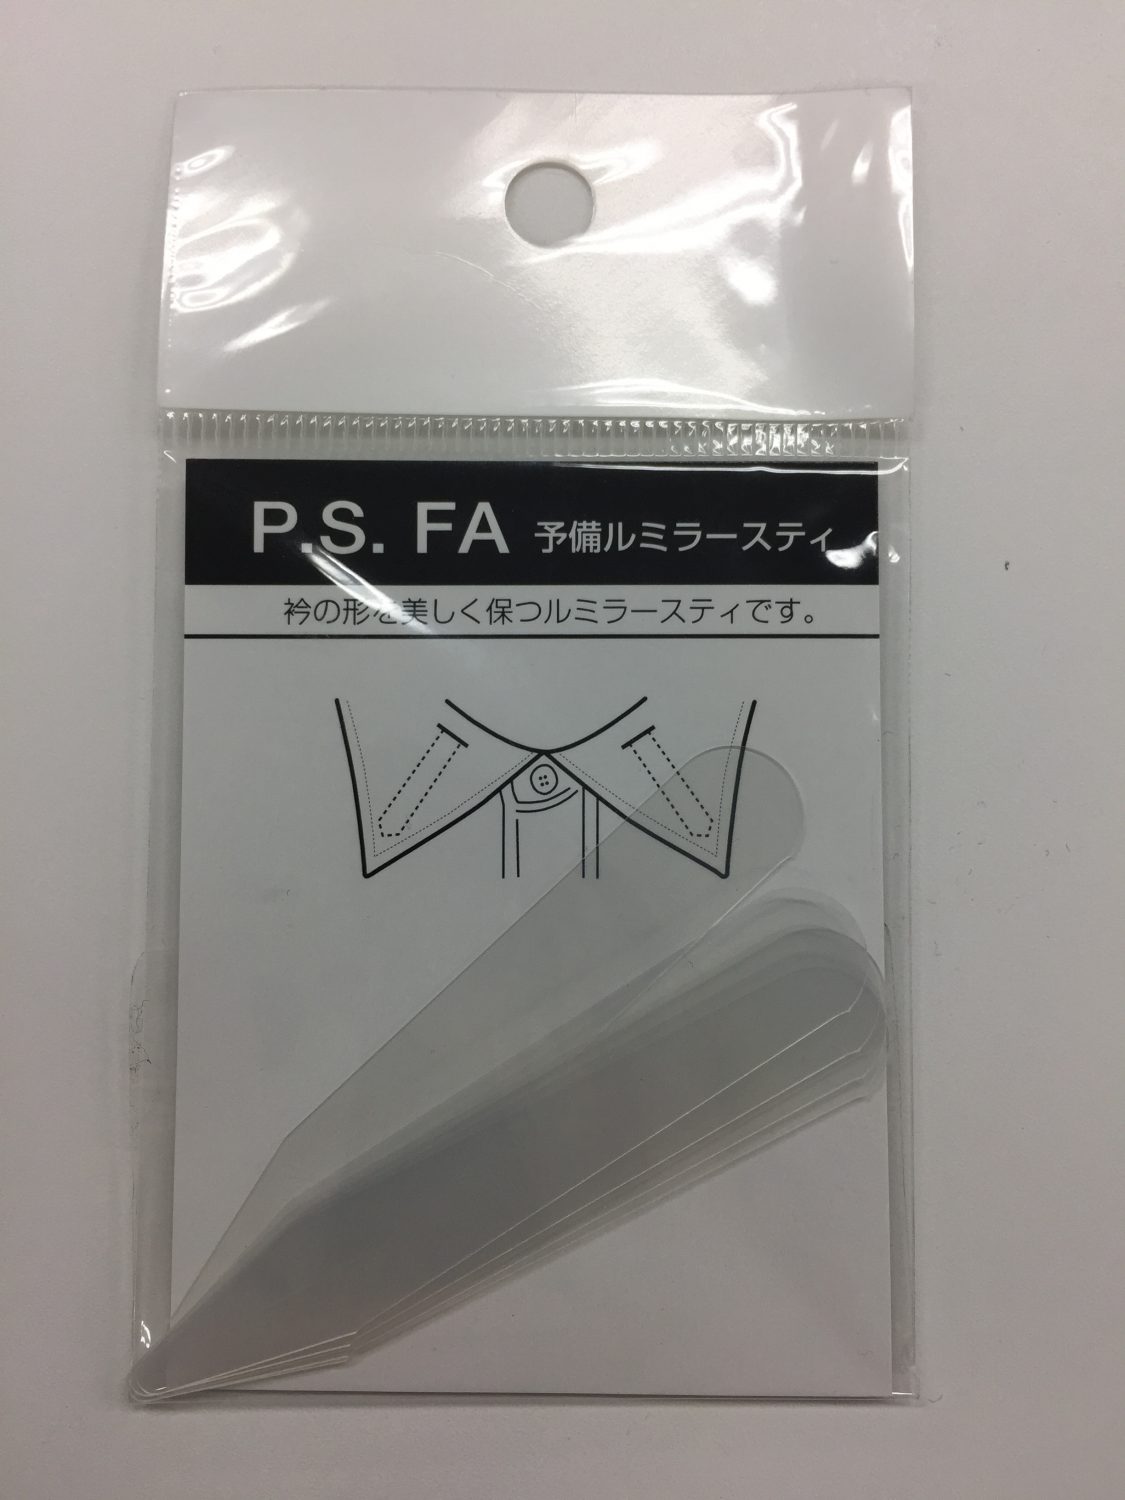 P.S.FAのカラーキーパー、１個200円で購入可能